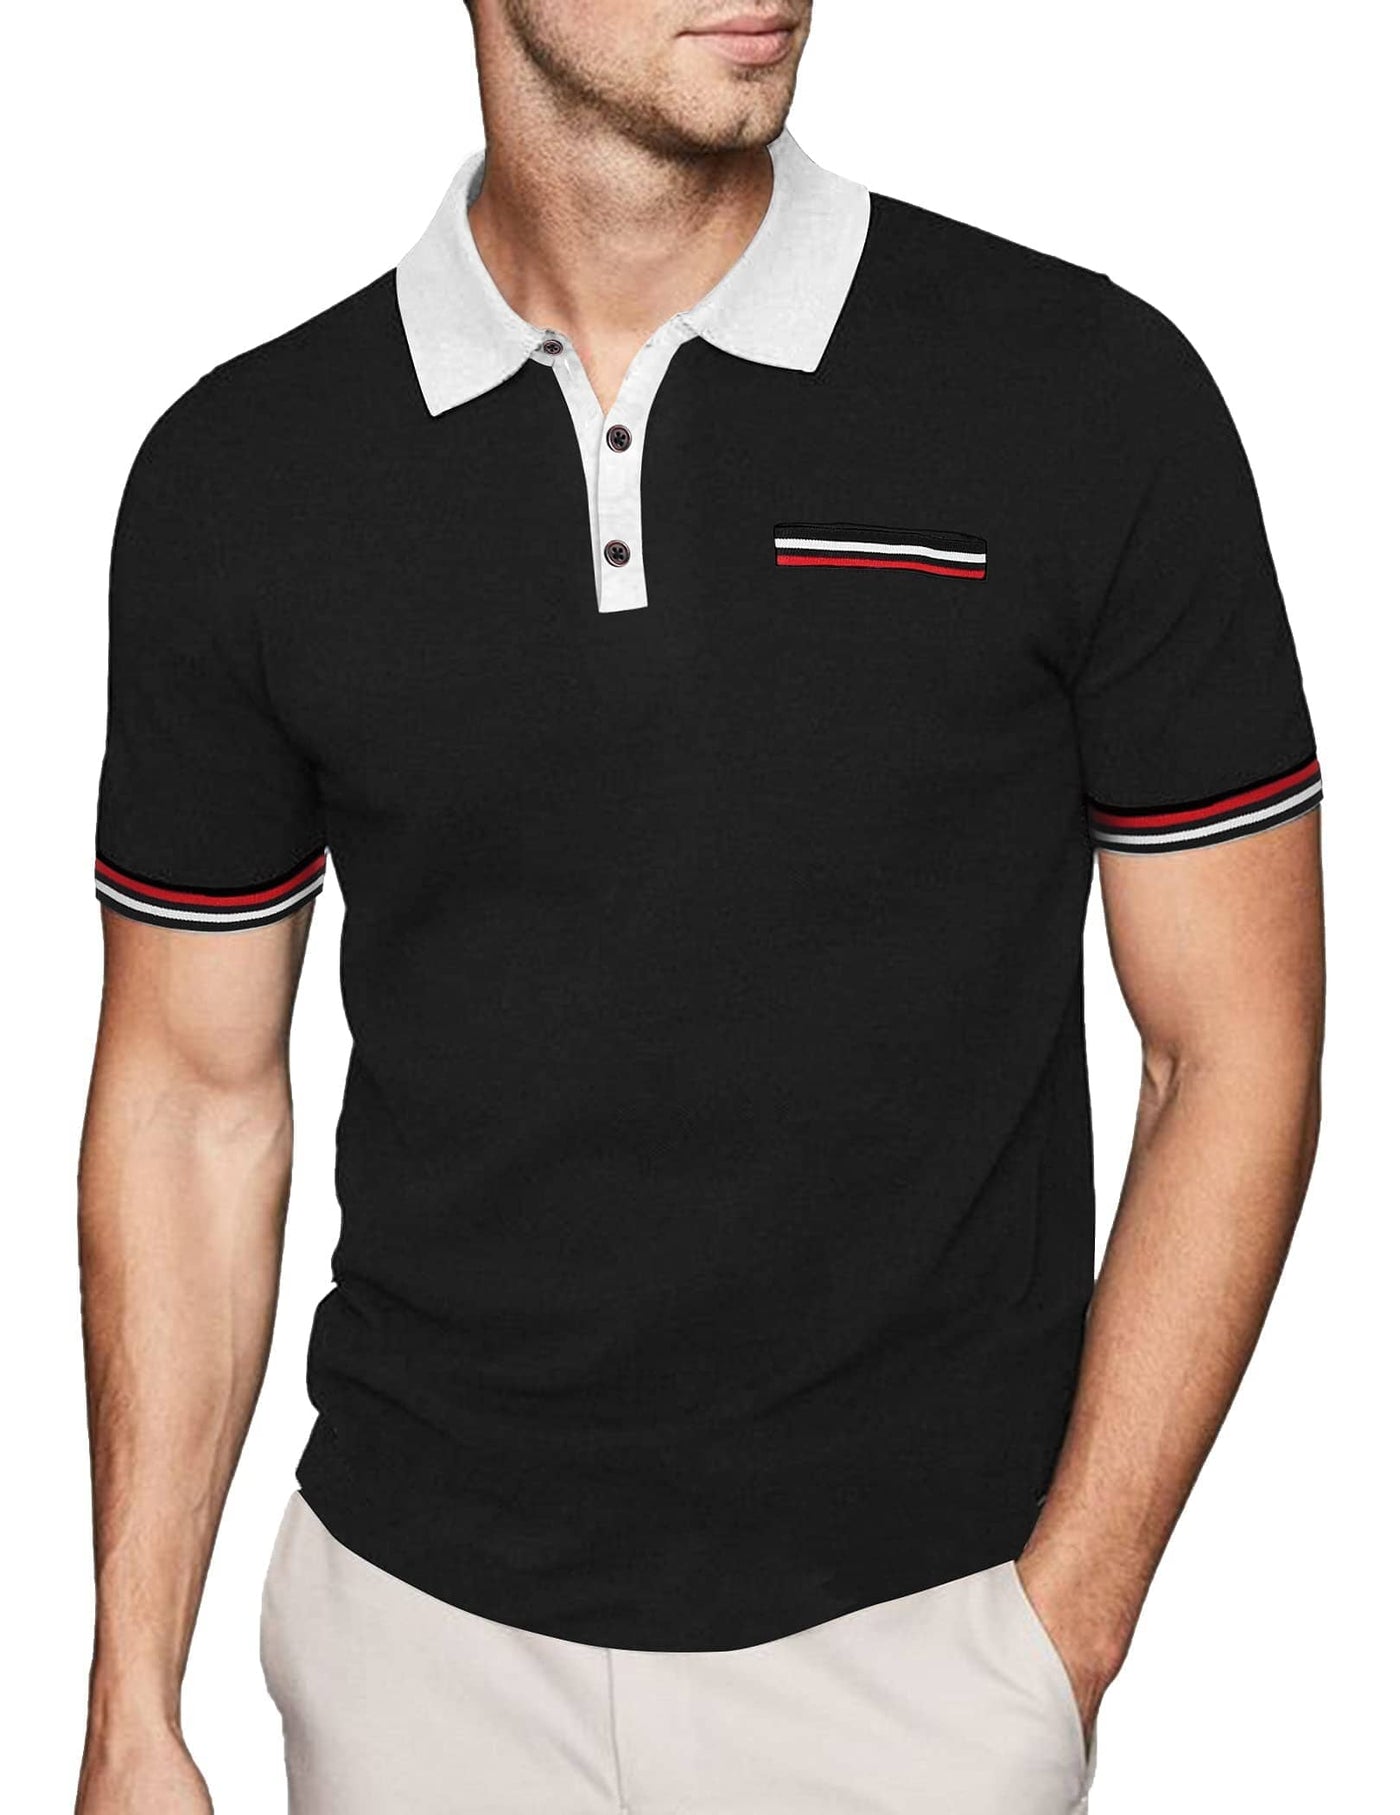 Coofandy Pocket Polo Shirt (US Only) Polos coofandy Black S 